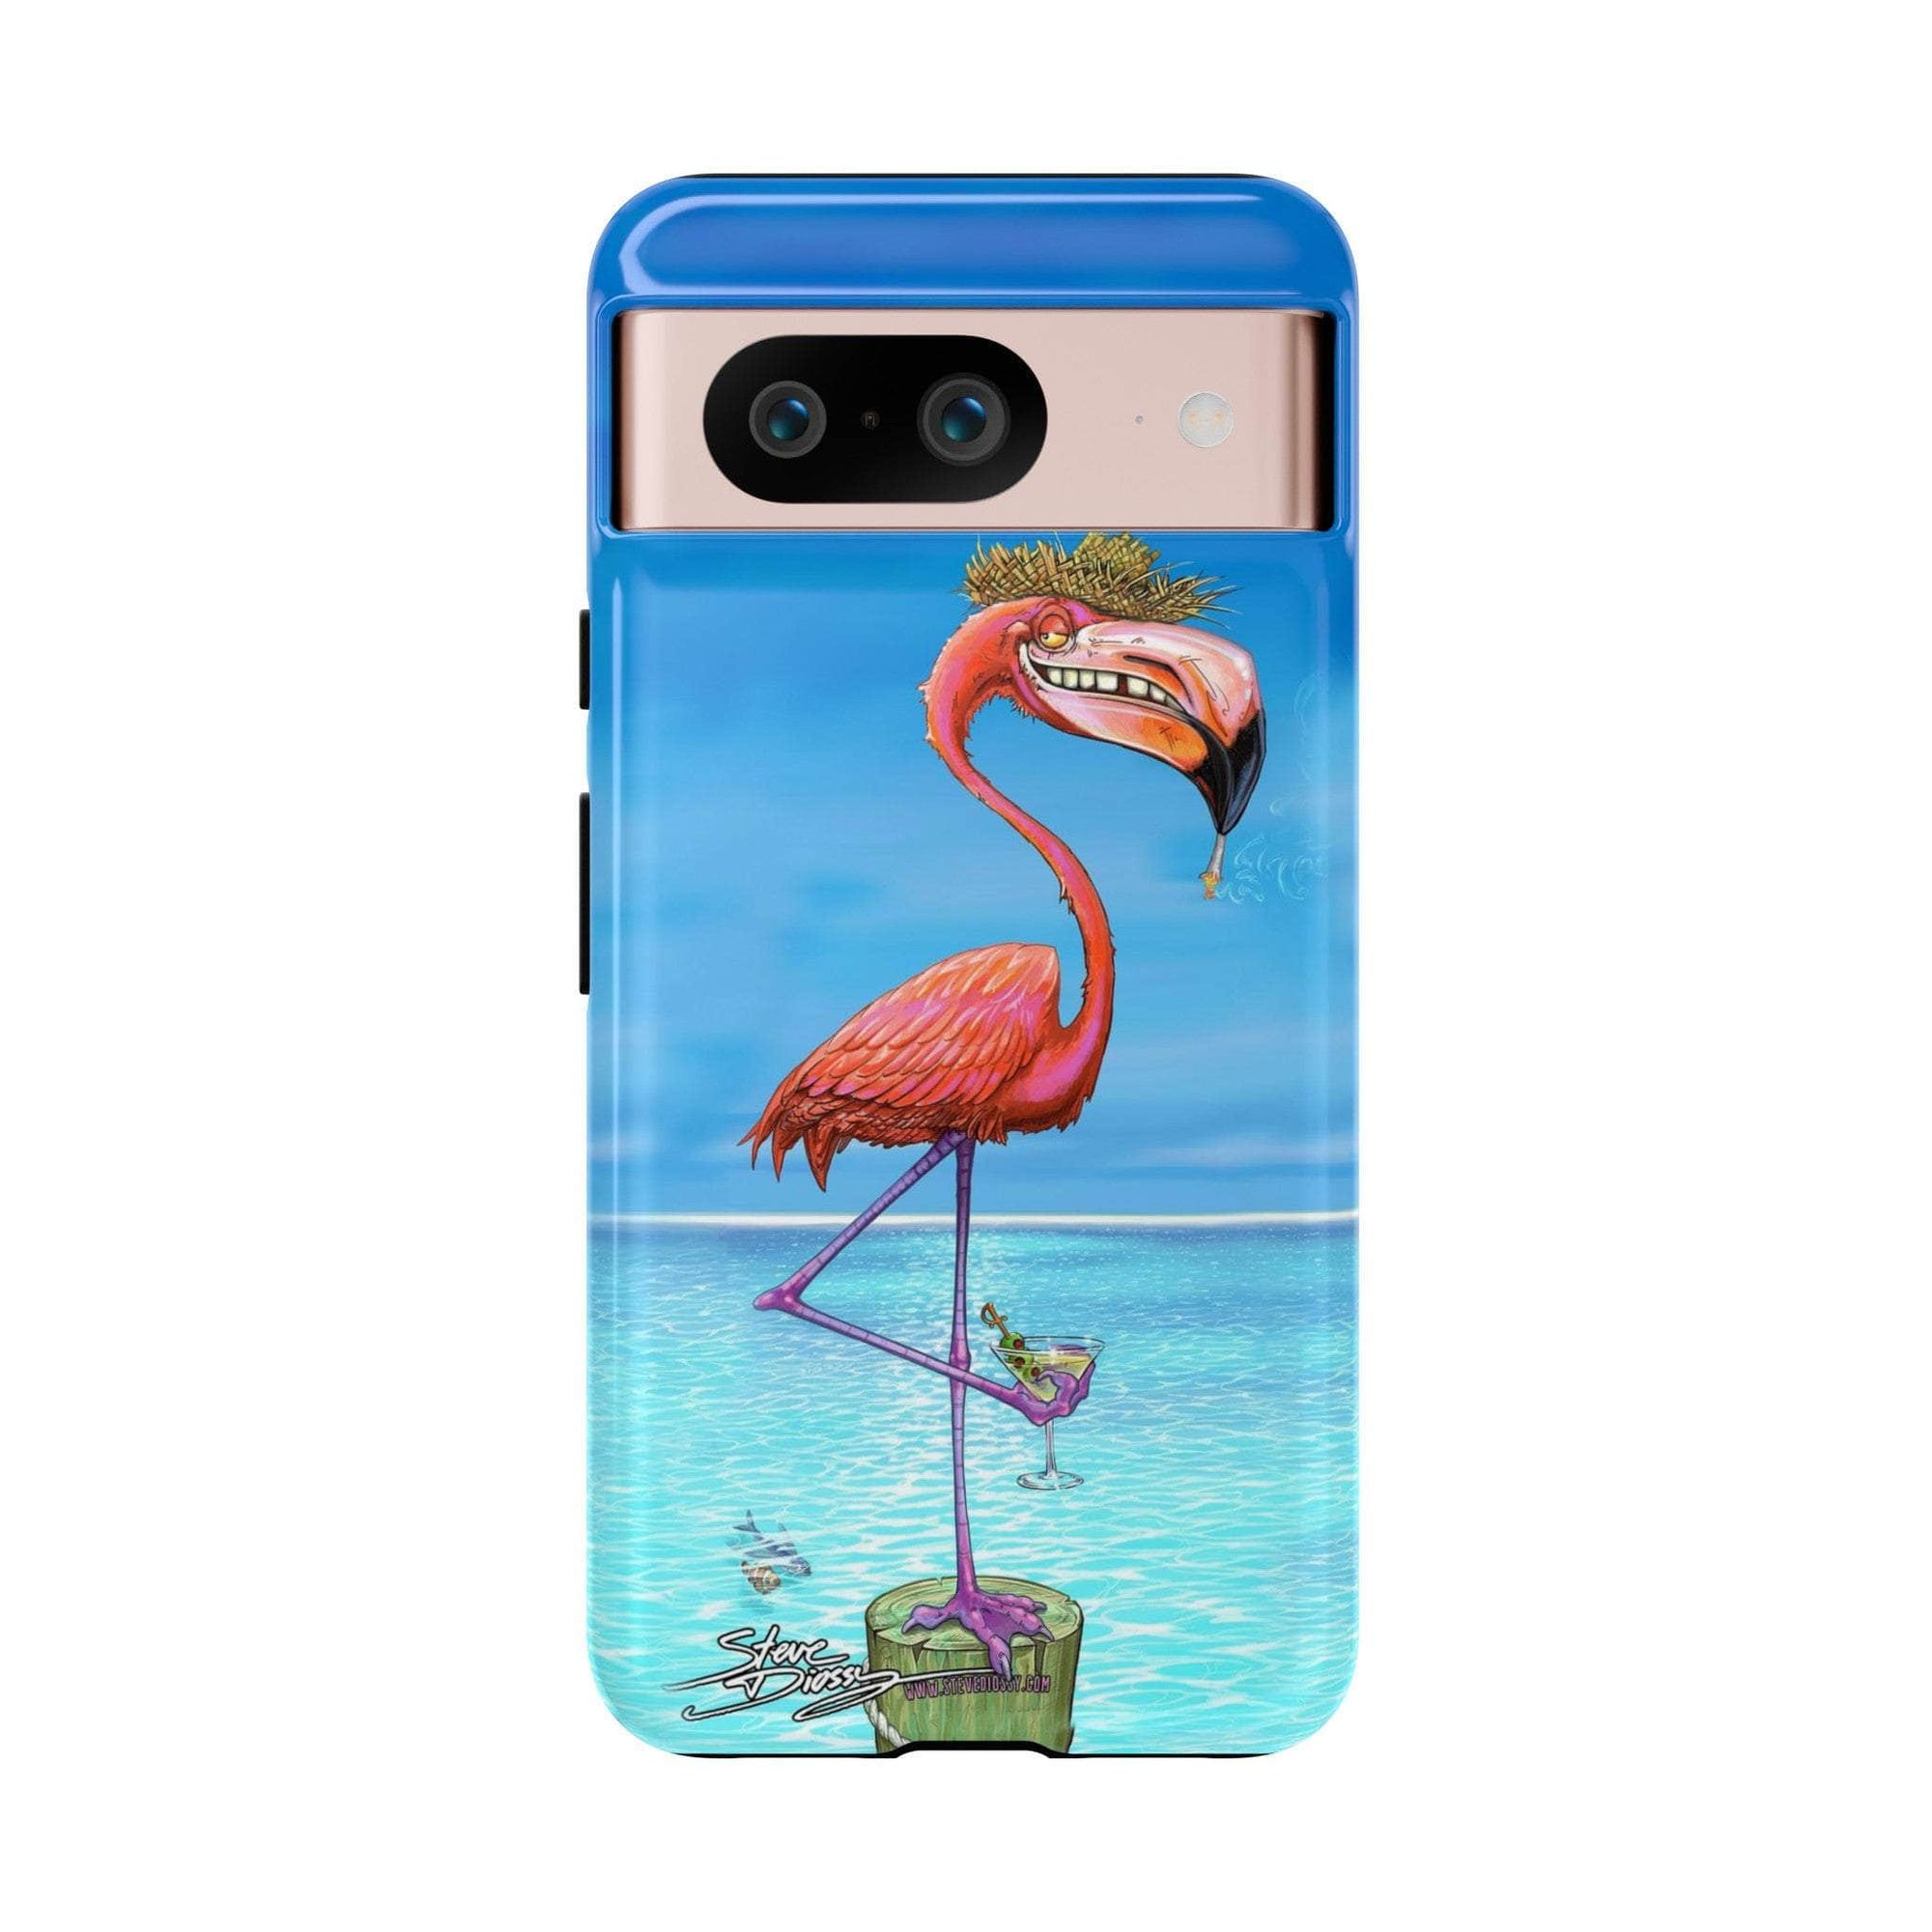 Dirty Flamingo Tough Phone Cases - Steve Diossy Marine Artist